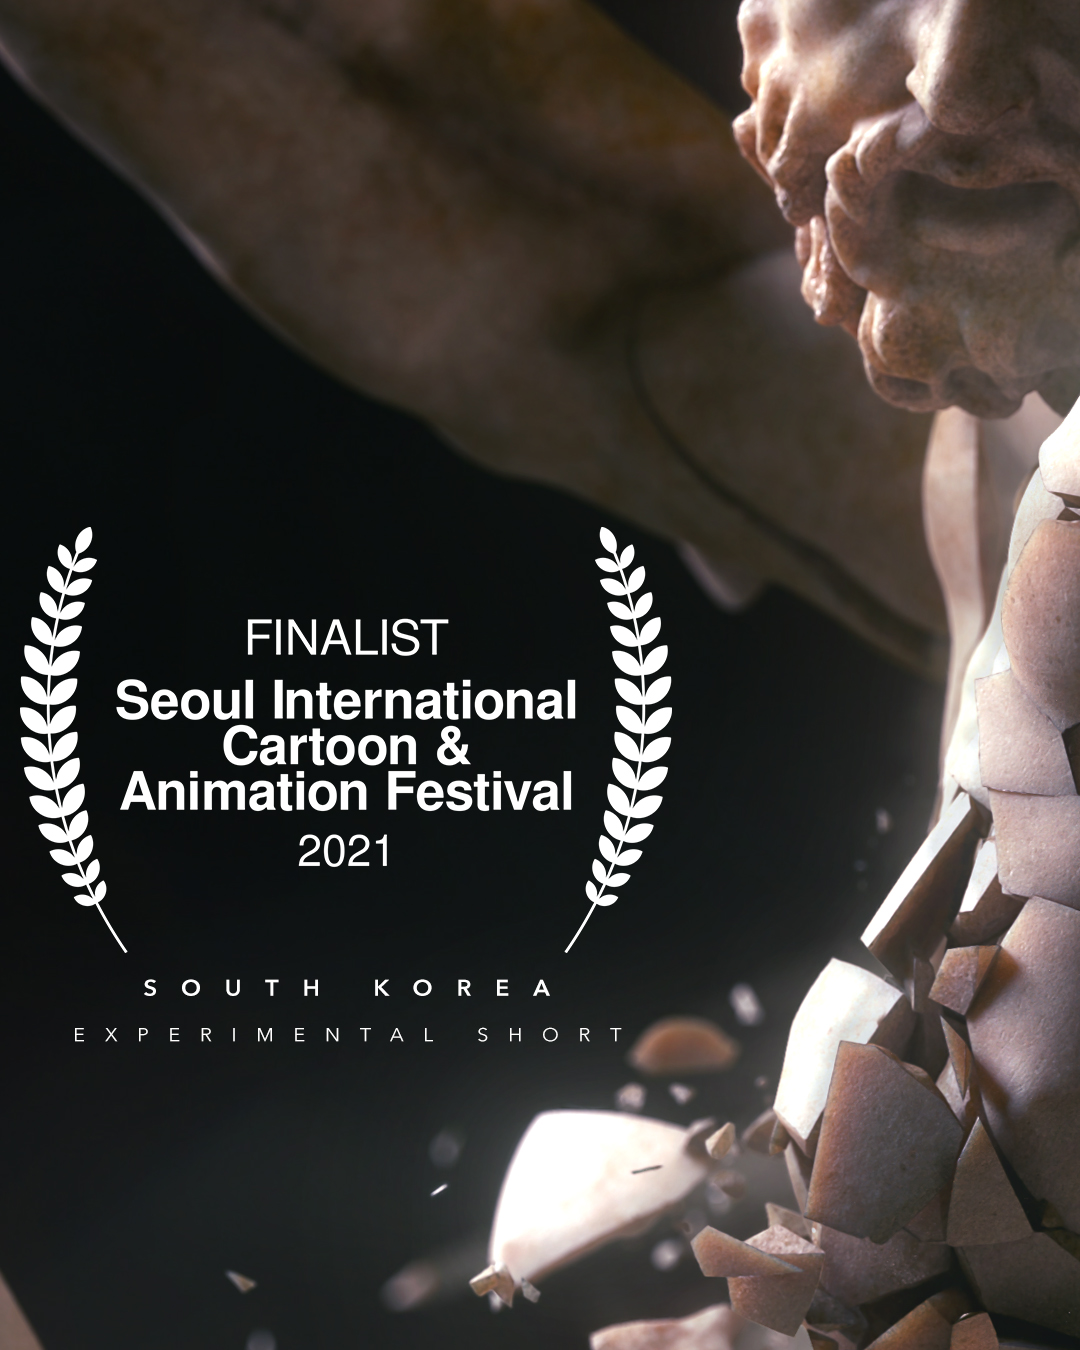 Finalist at Seoul International Cartoon & Animation Festival